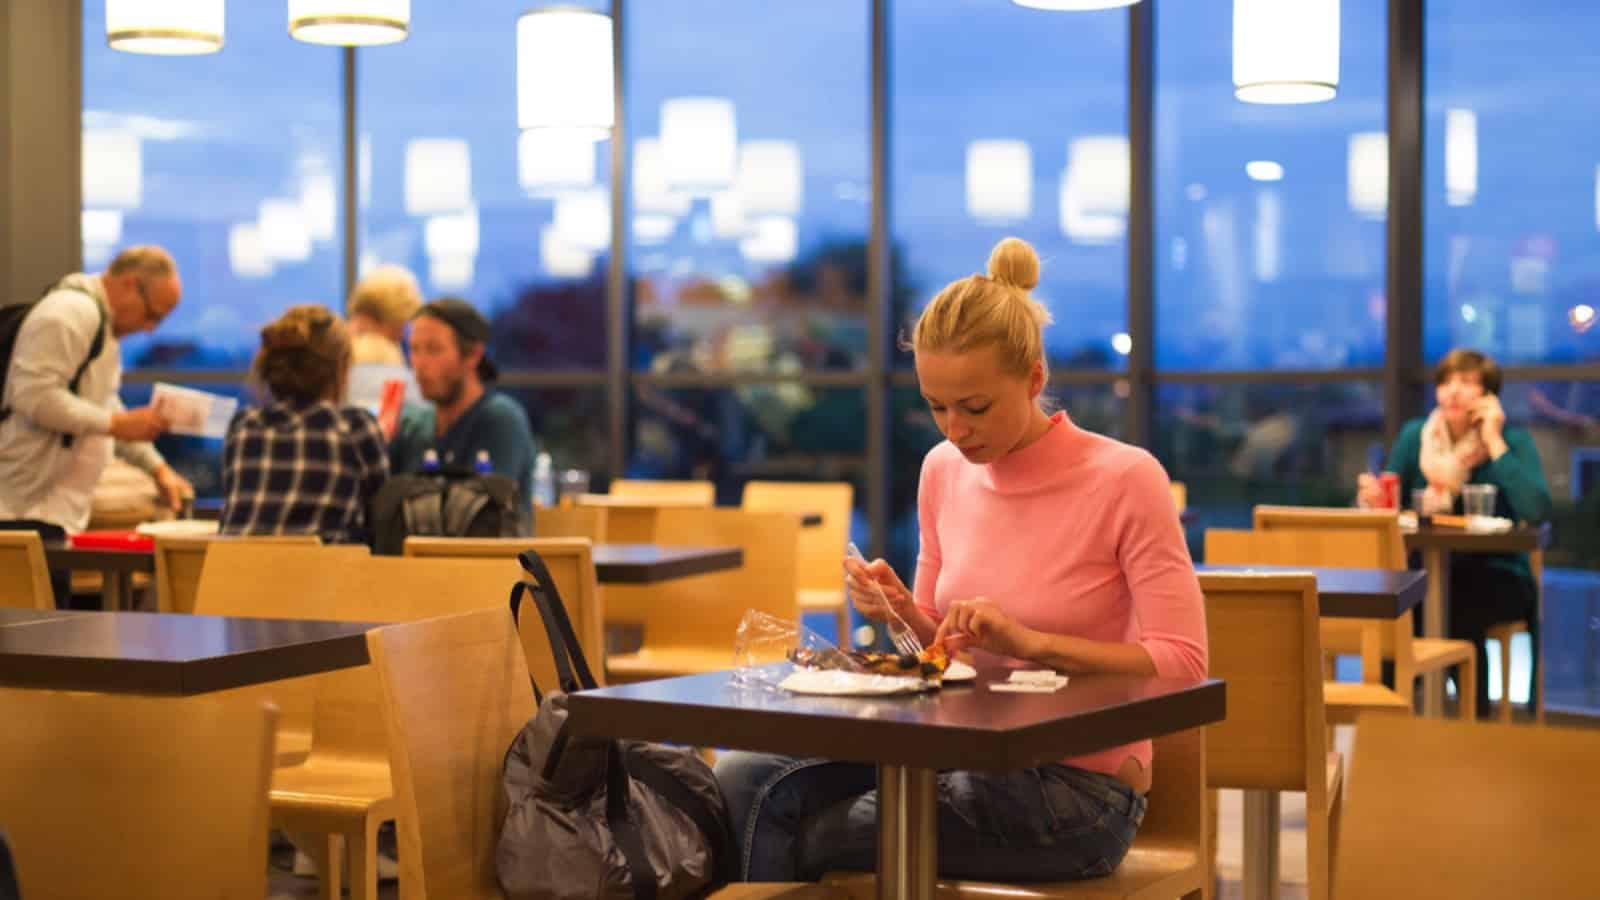 Traveler eating airport